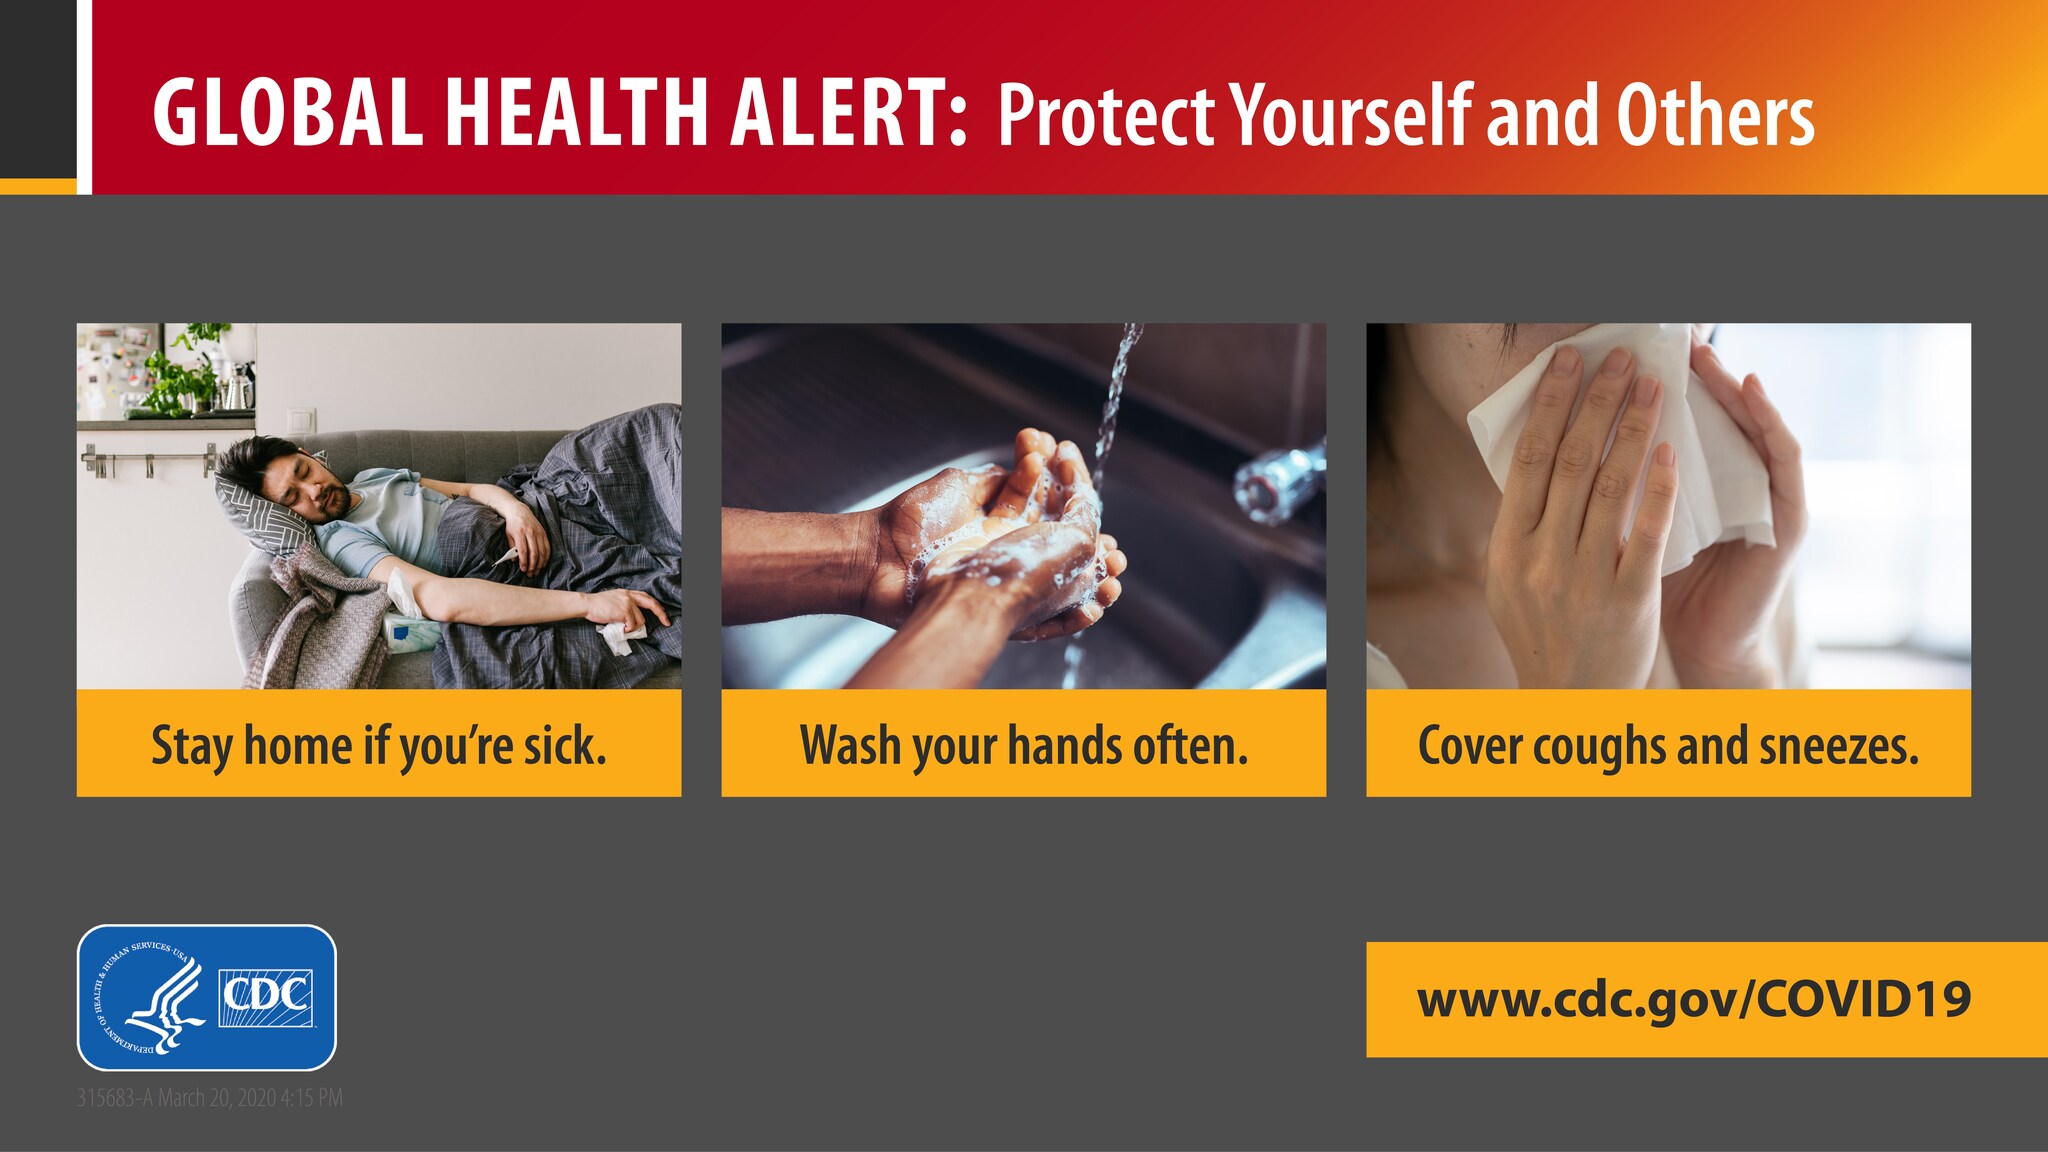 https://www.cdc.gov/coronavirus/2019-ncov/images/travel-health-alert-protect-yourself.jpg